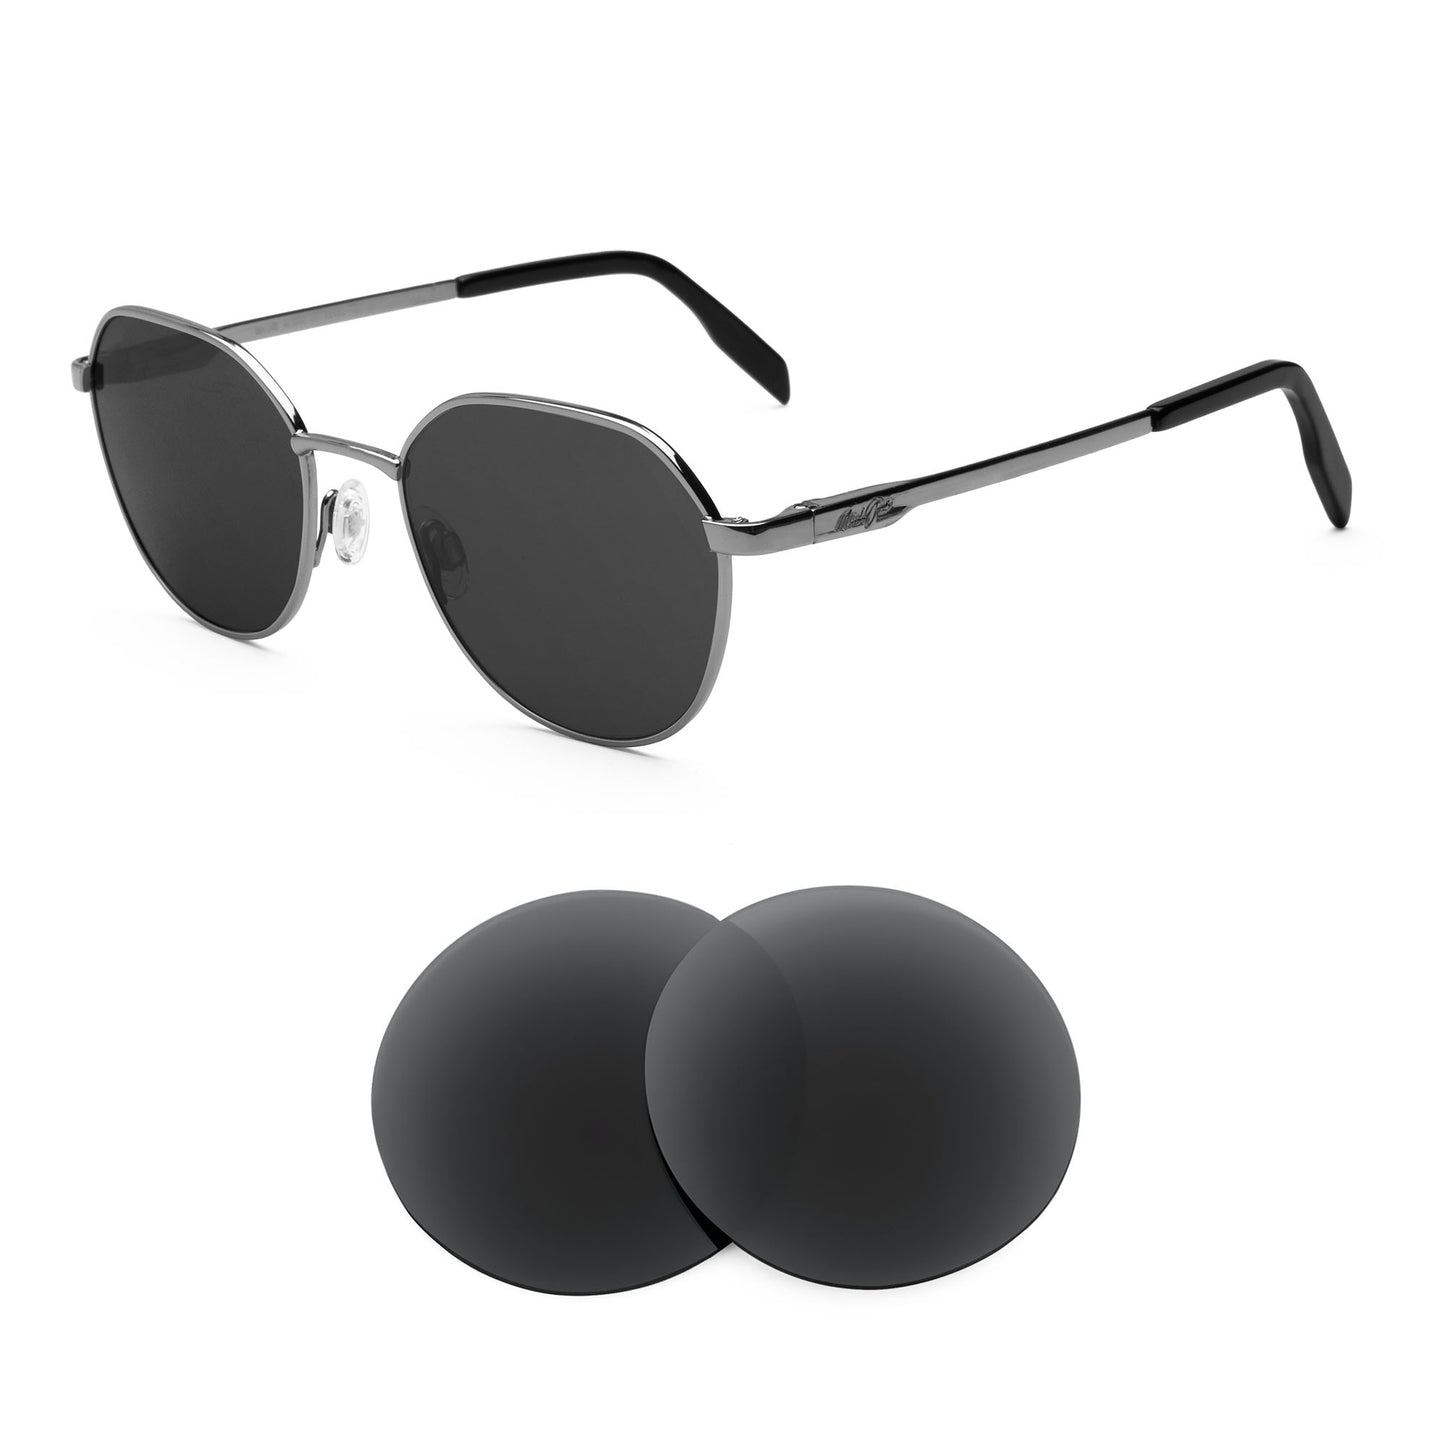 Maui Jim Hukilau MJ845 sunglasses with replacement lenses